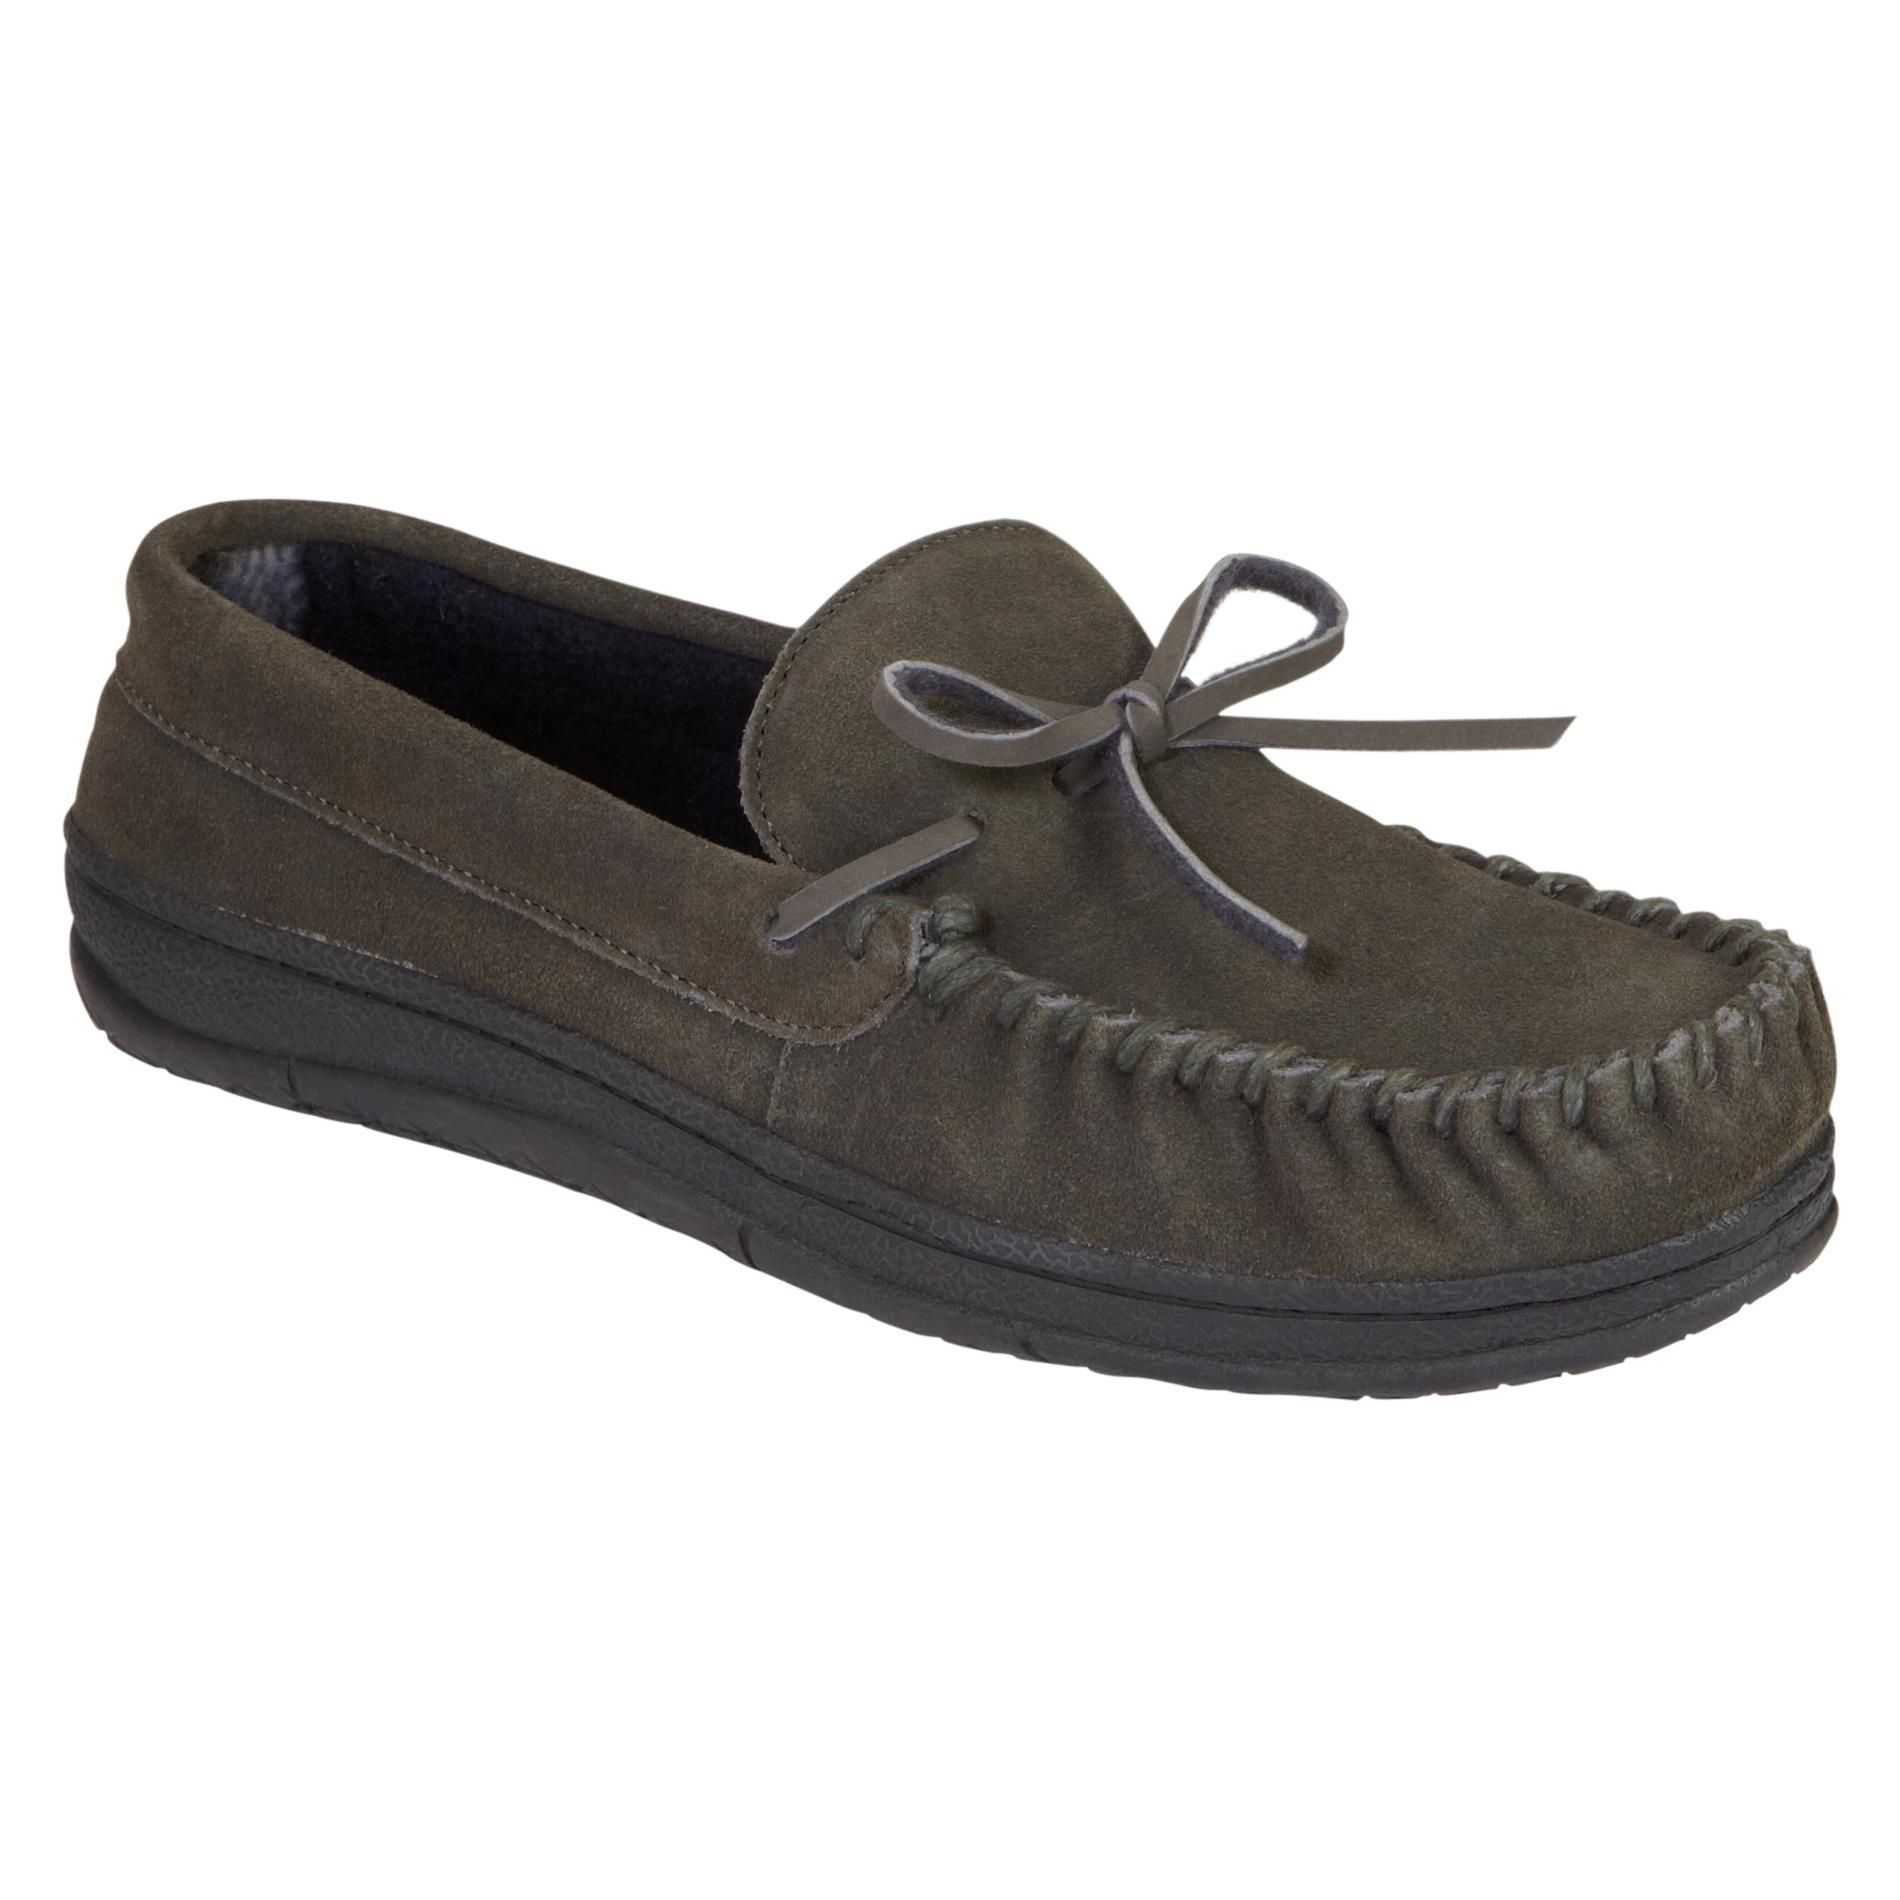 birkenstock sandals womens size 8